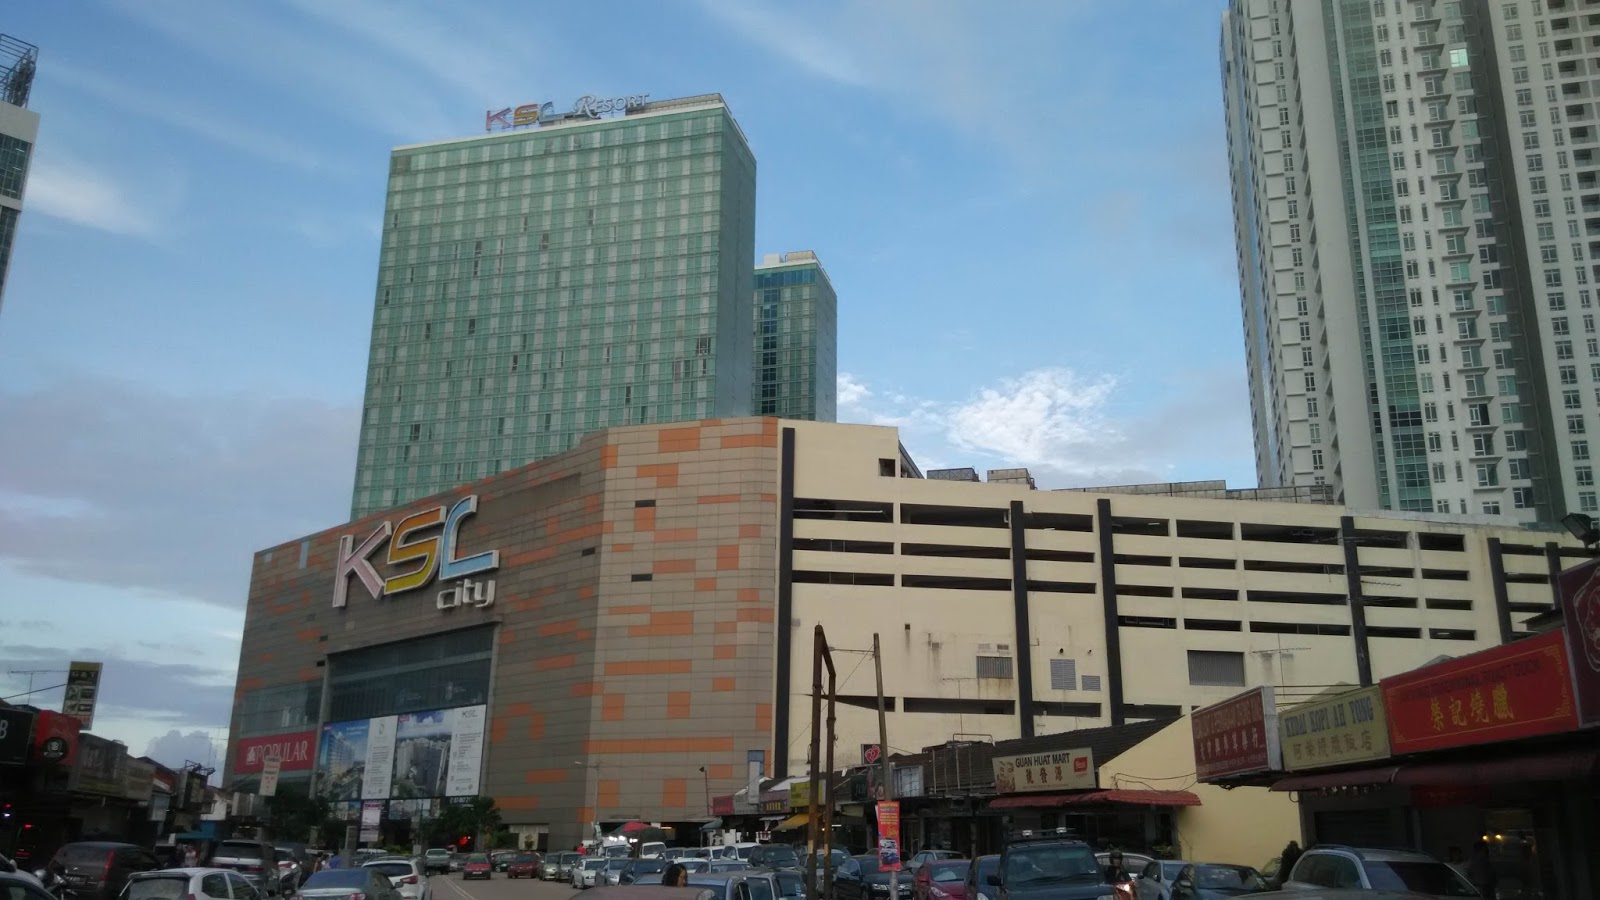 Our Journey : Johor Johor Bahru - KSL City Mall